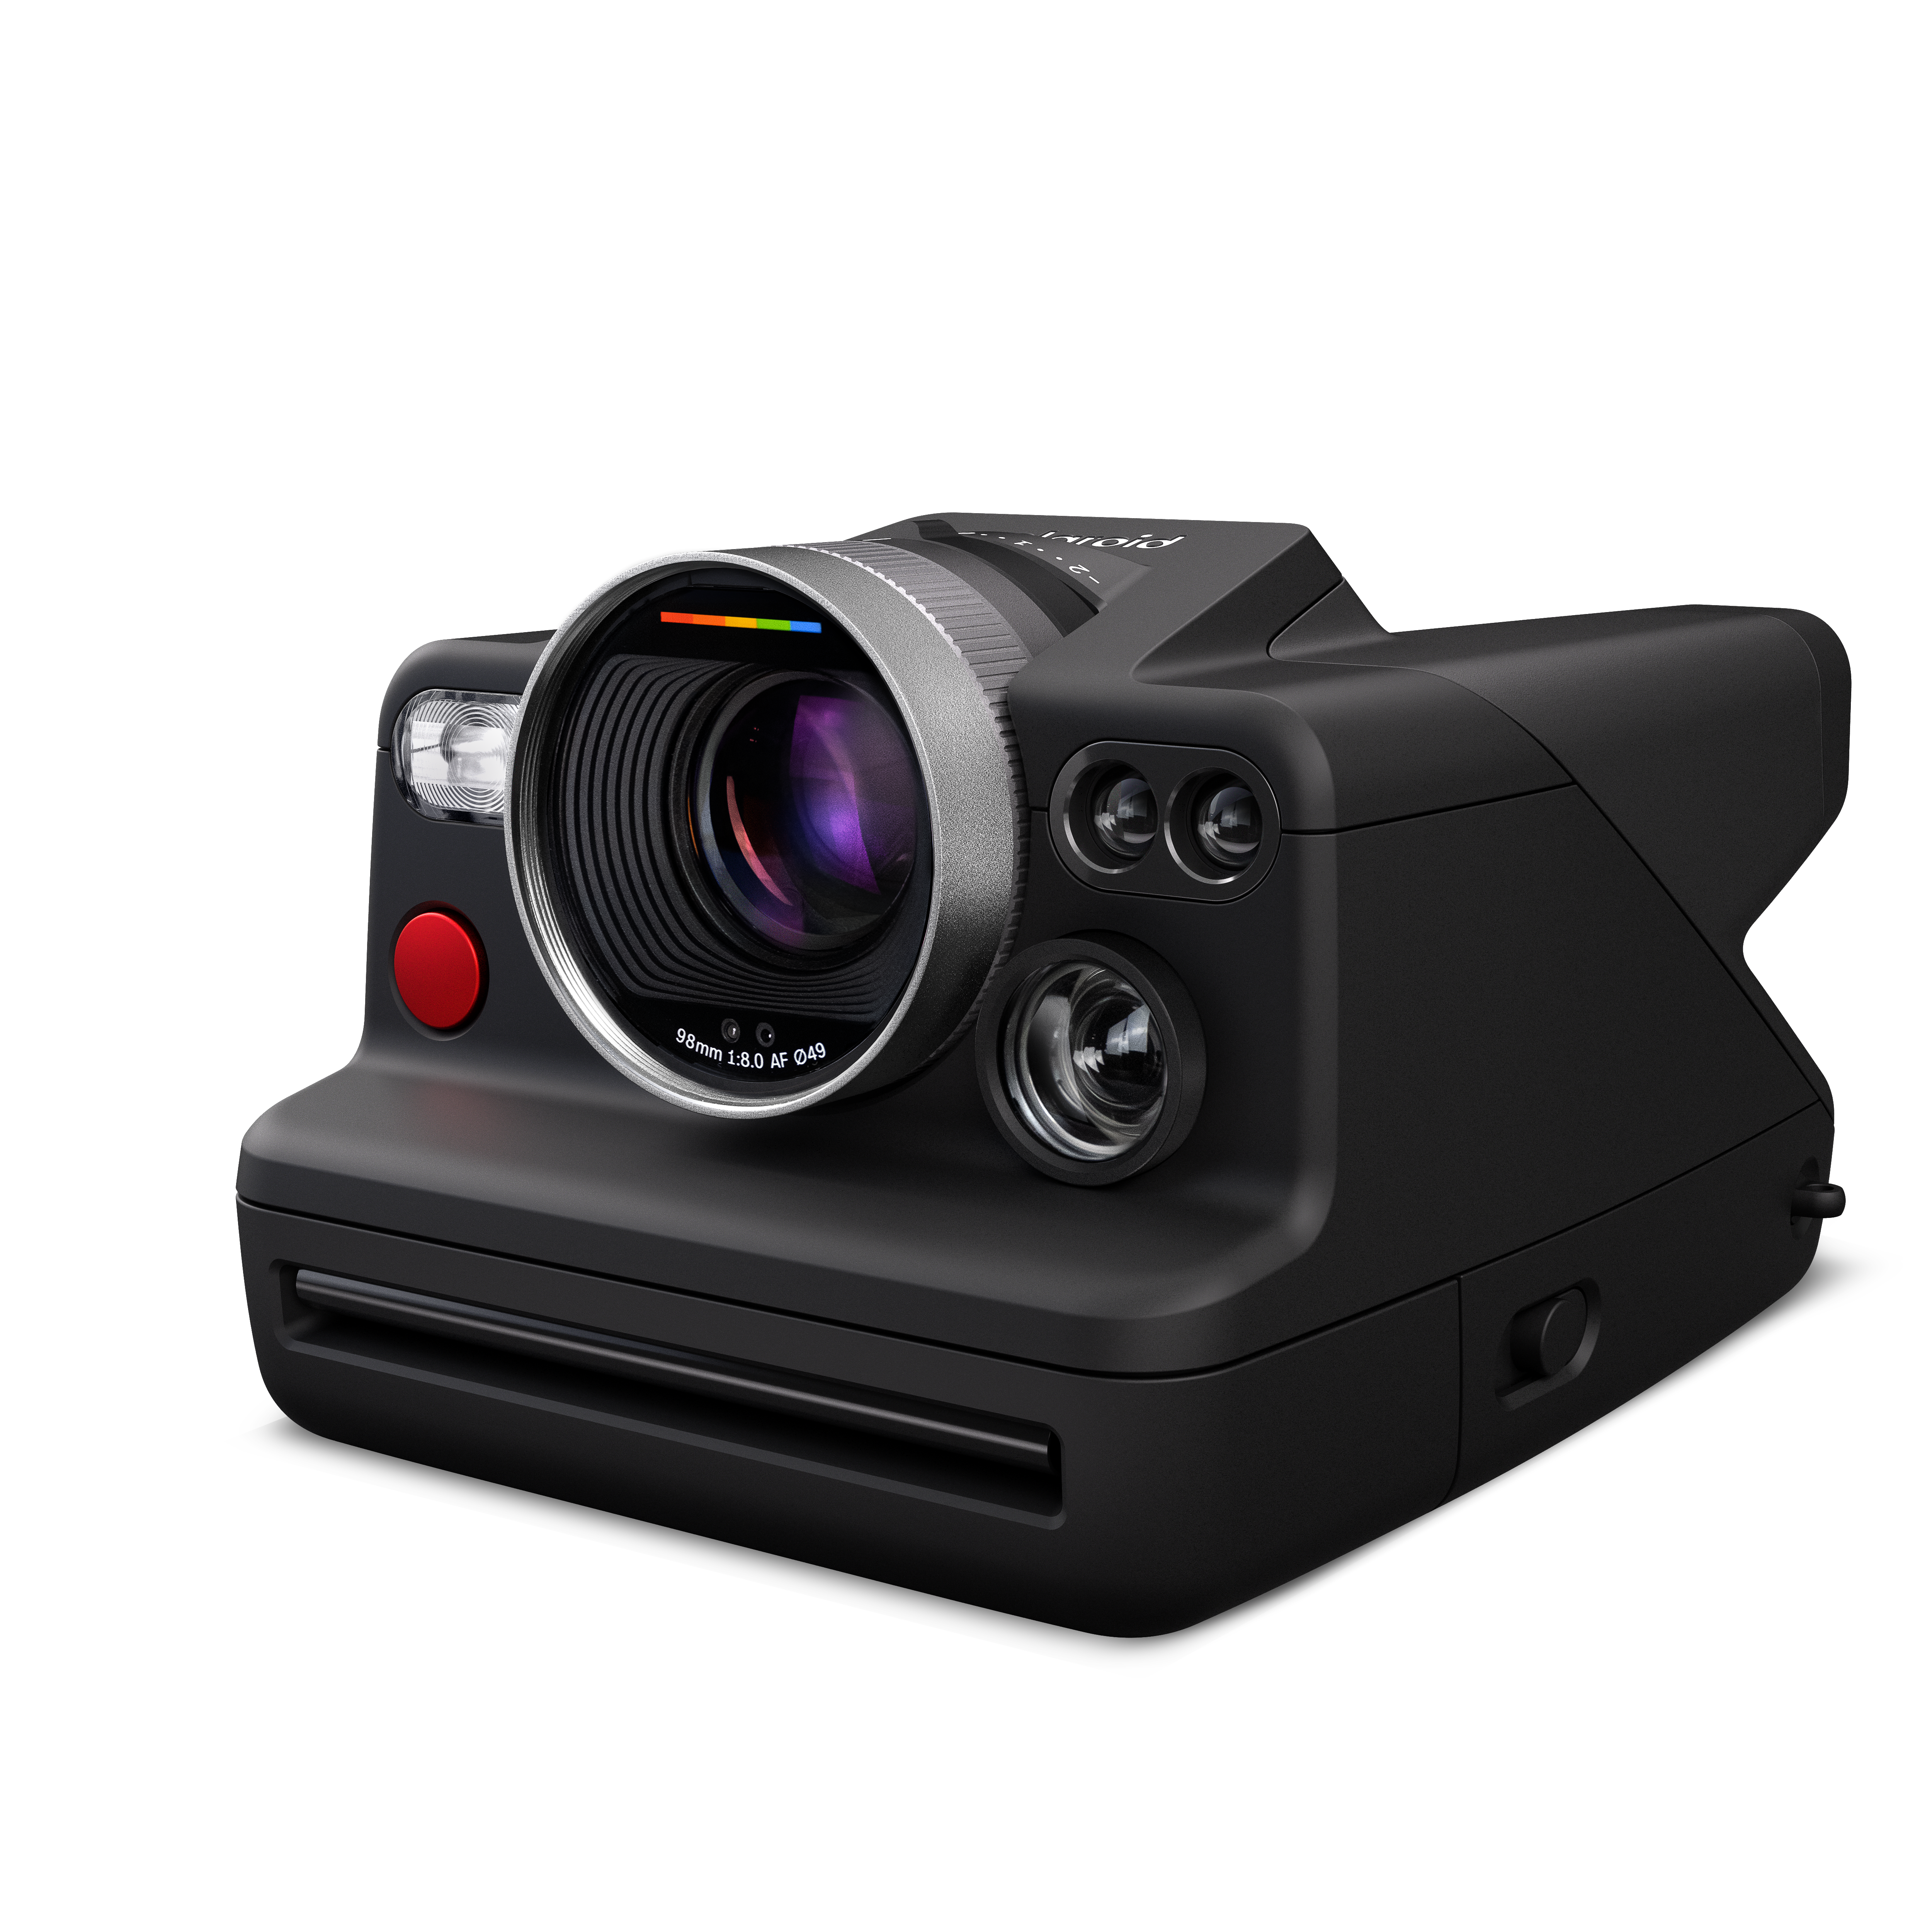 Polaroid I-2, A High-end Instant Camera